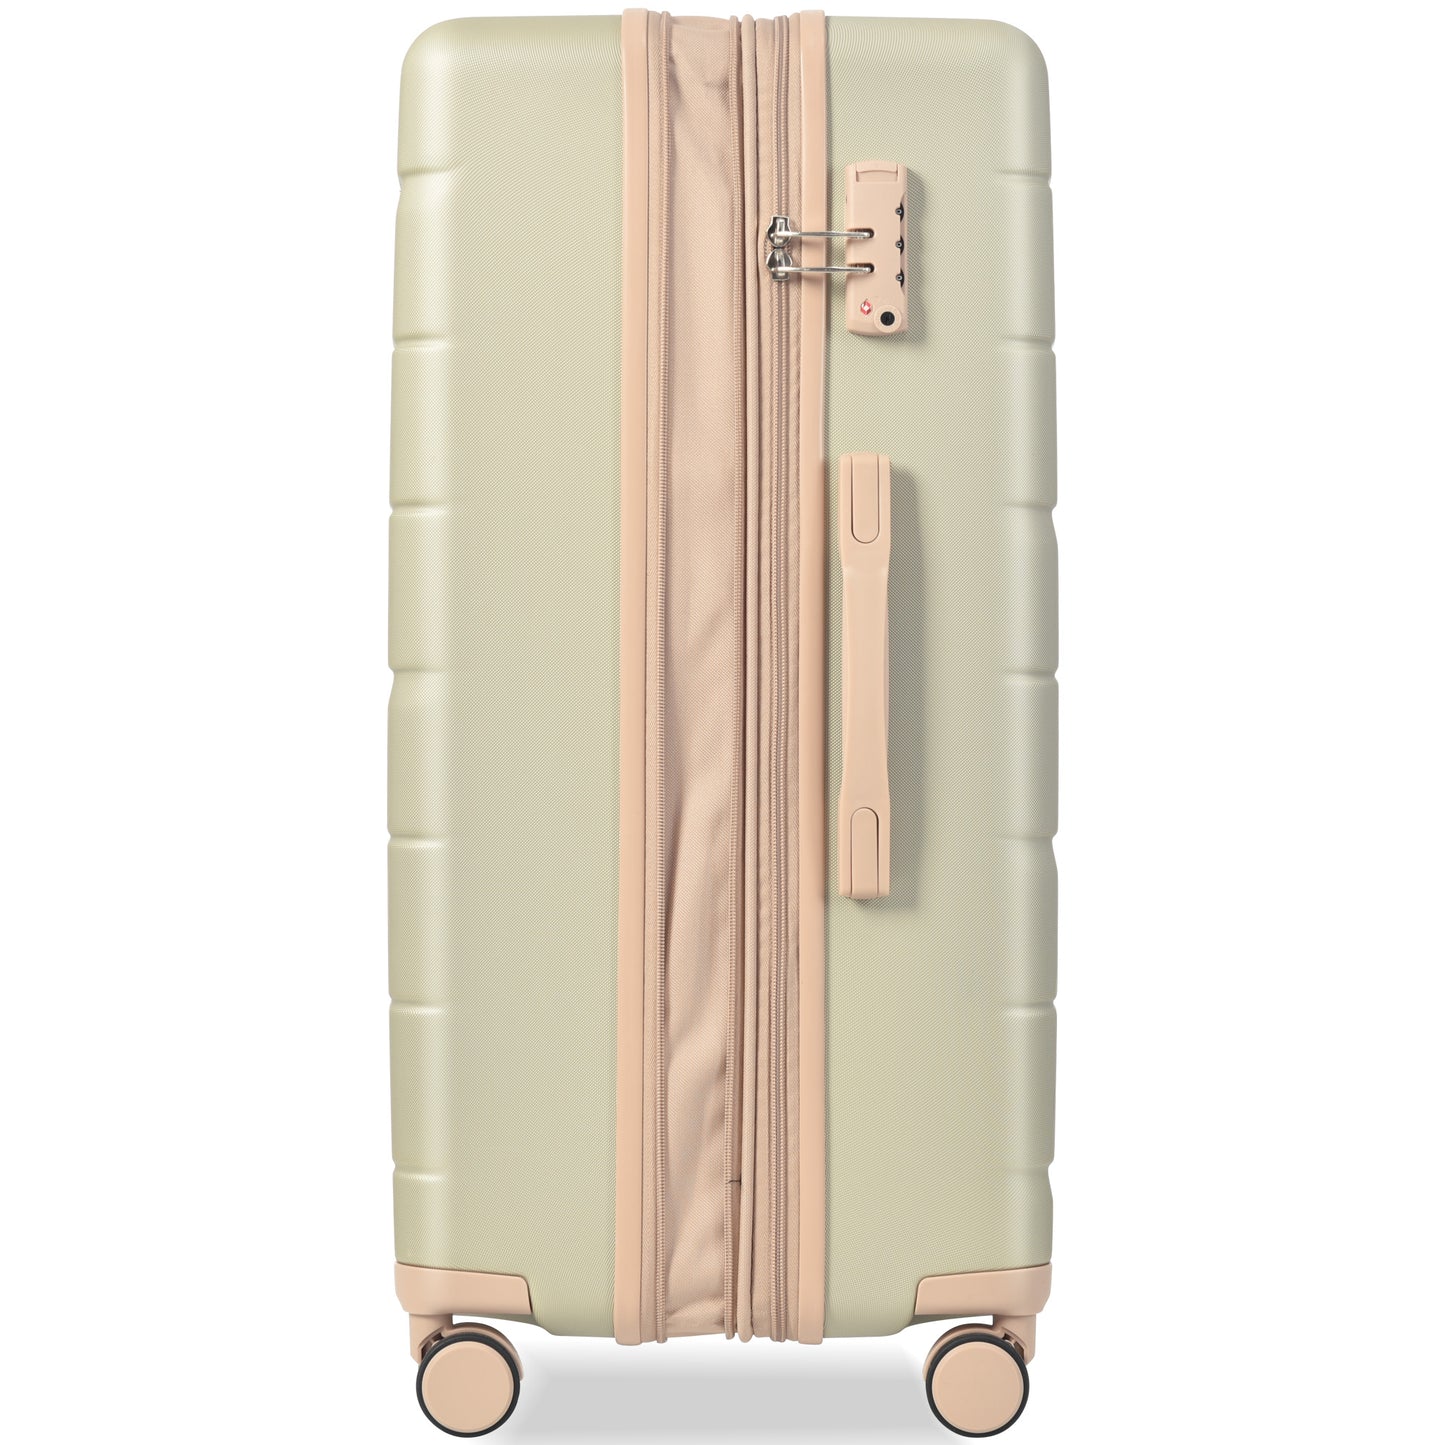 Golden Green Luggage Sets 3 Piece Suitcase Set 20/24/28